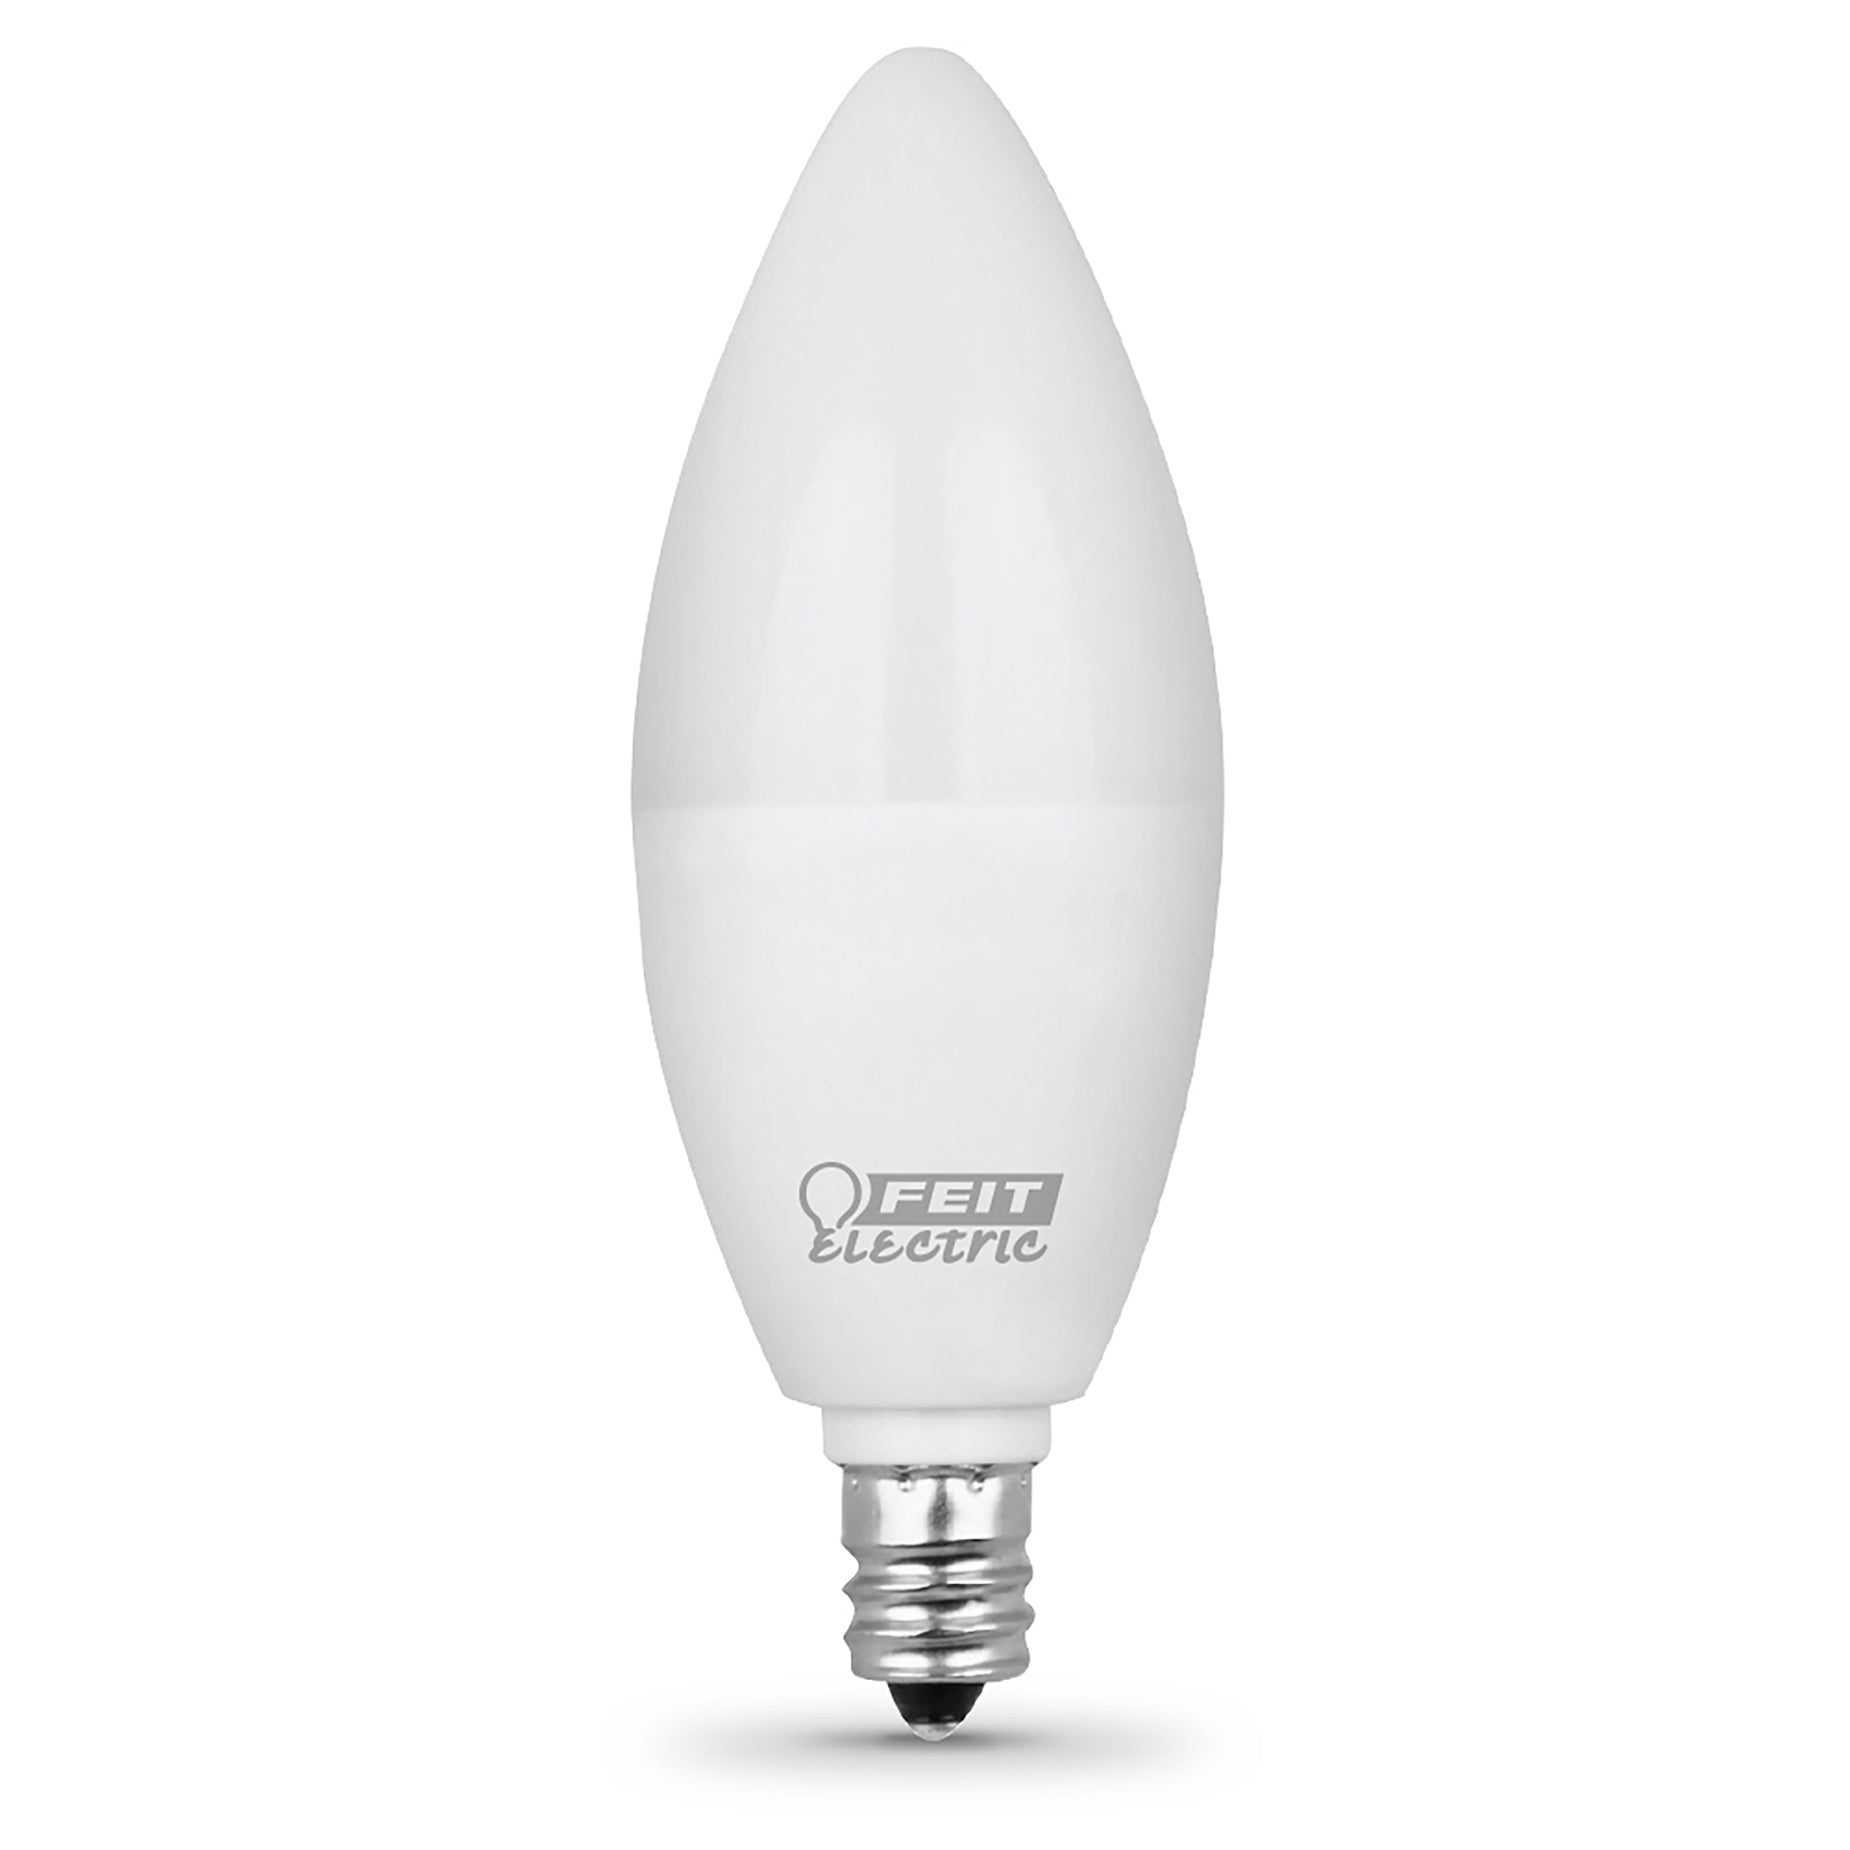 LED Light Bulbs, 4.5 E12, Torpedo Tip Shape, 300 Lumens, 3000K